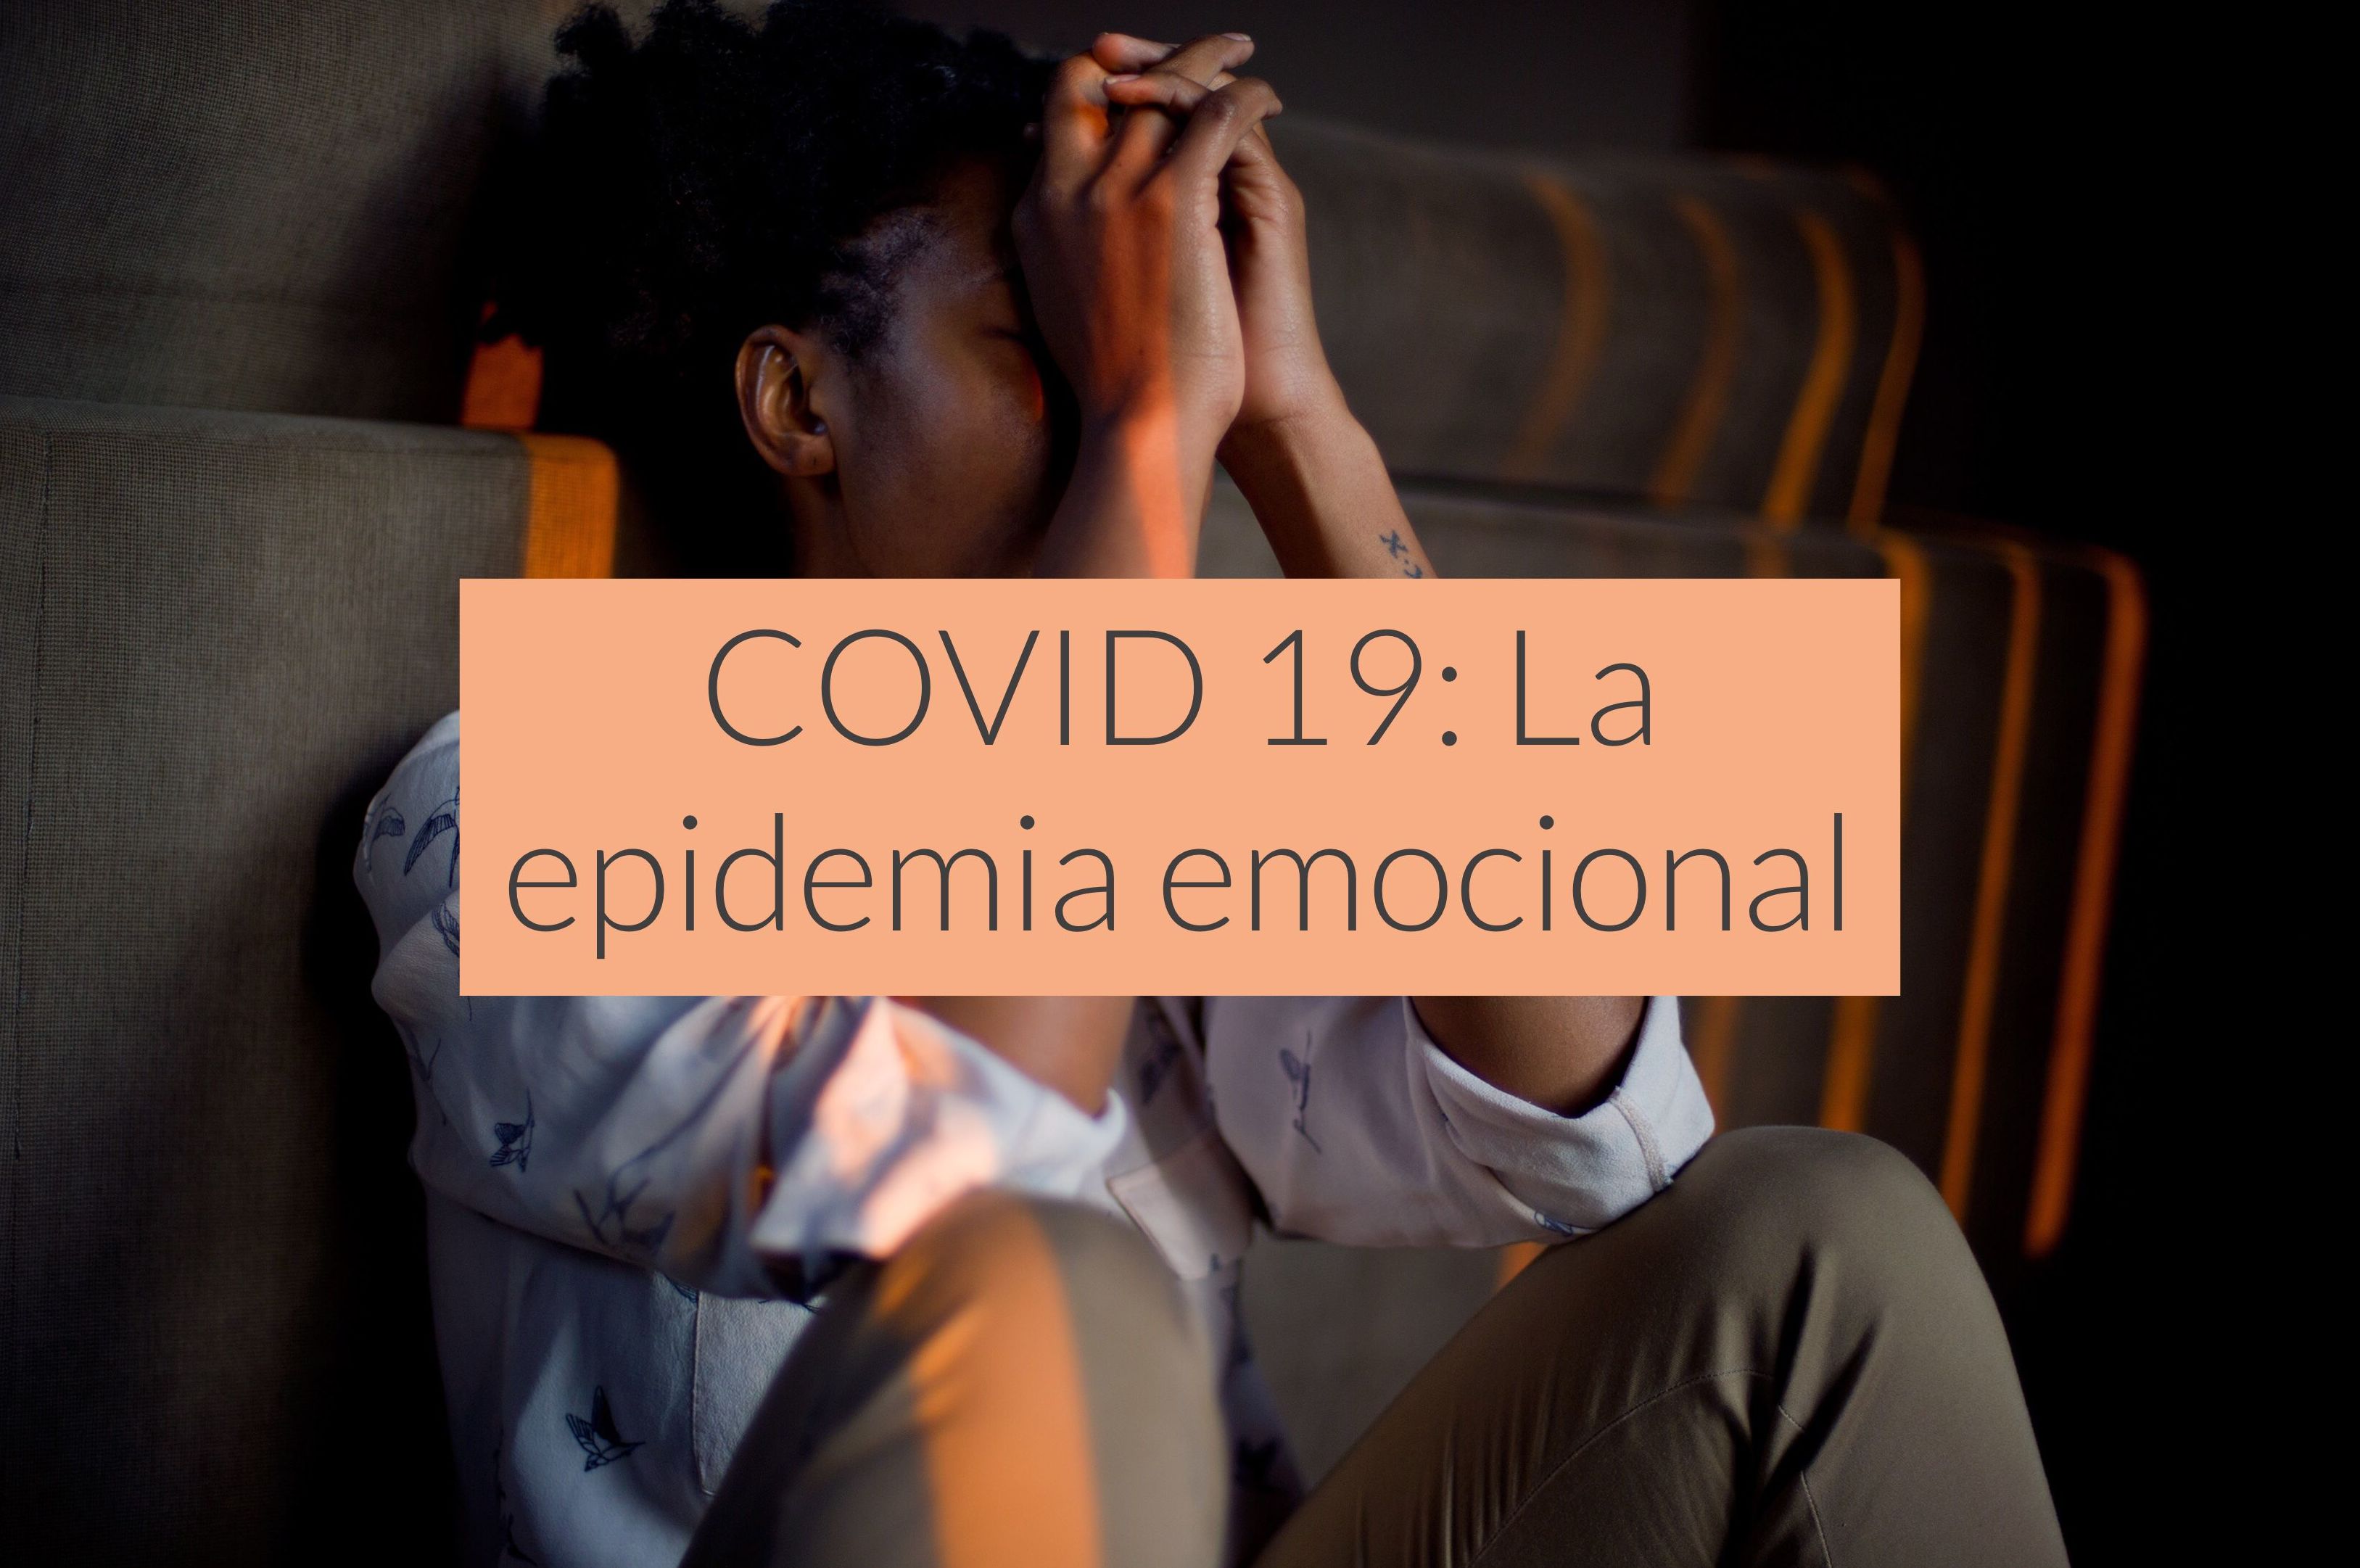 COVID 19: La epidemia emocional 